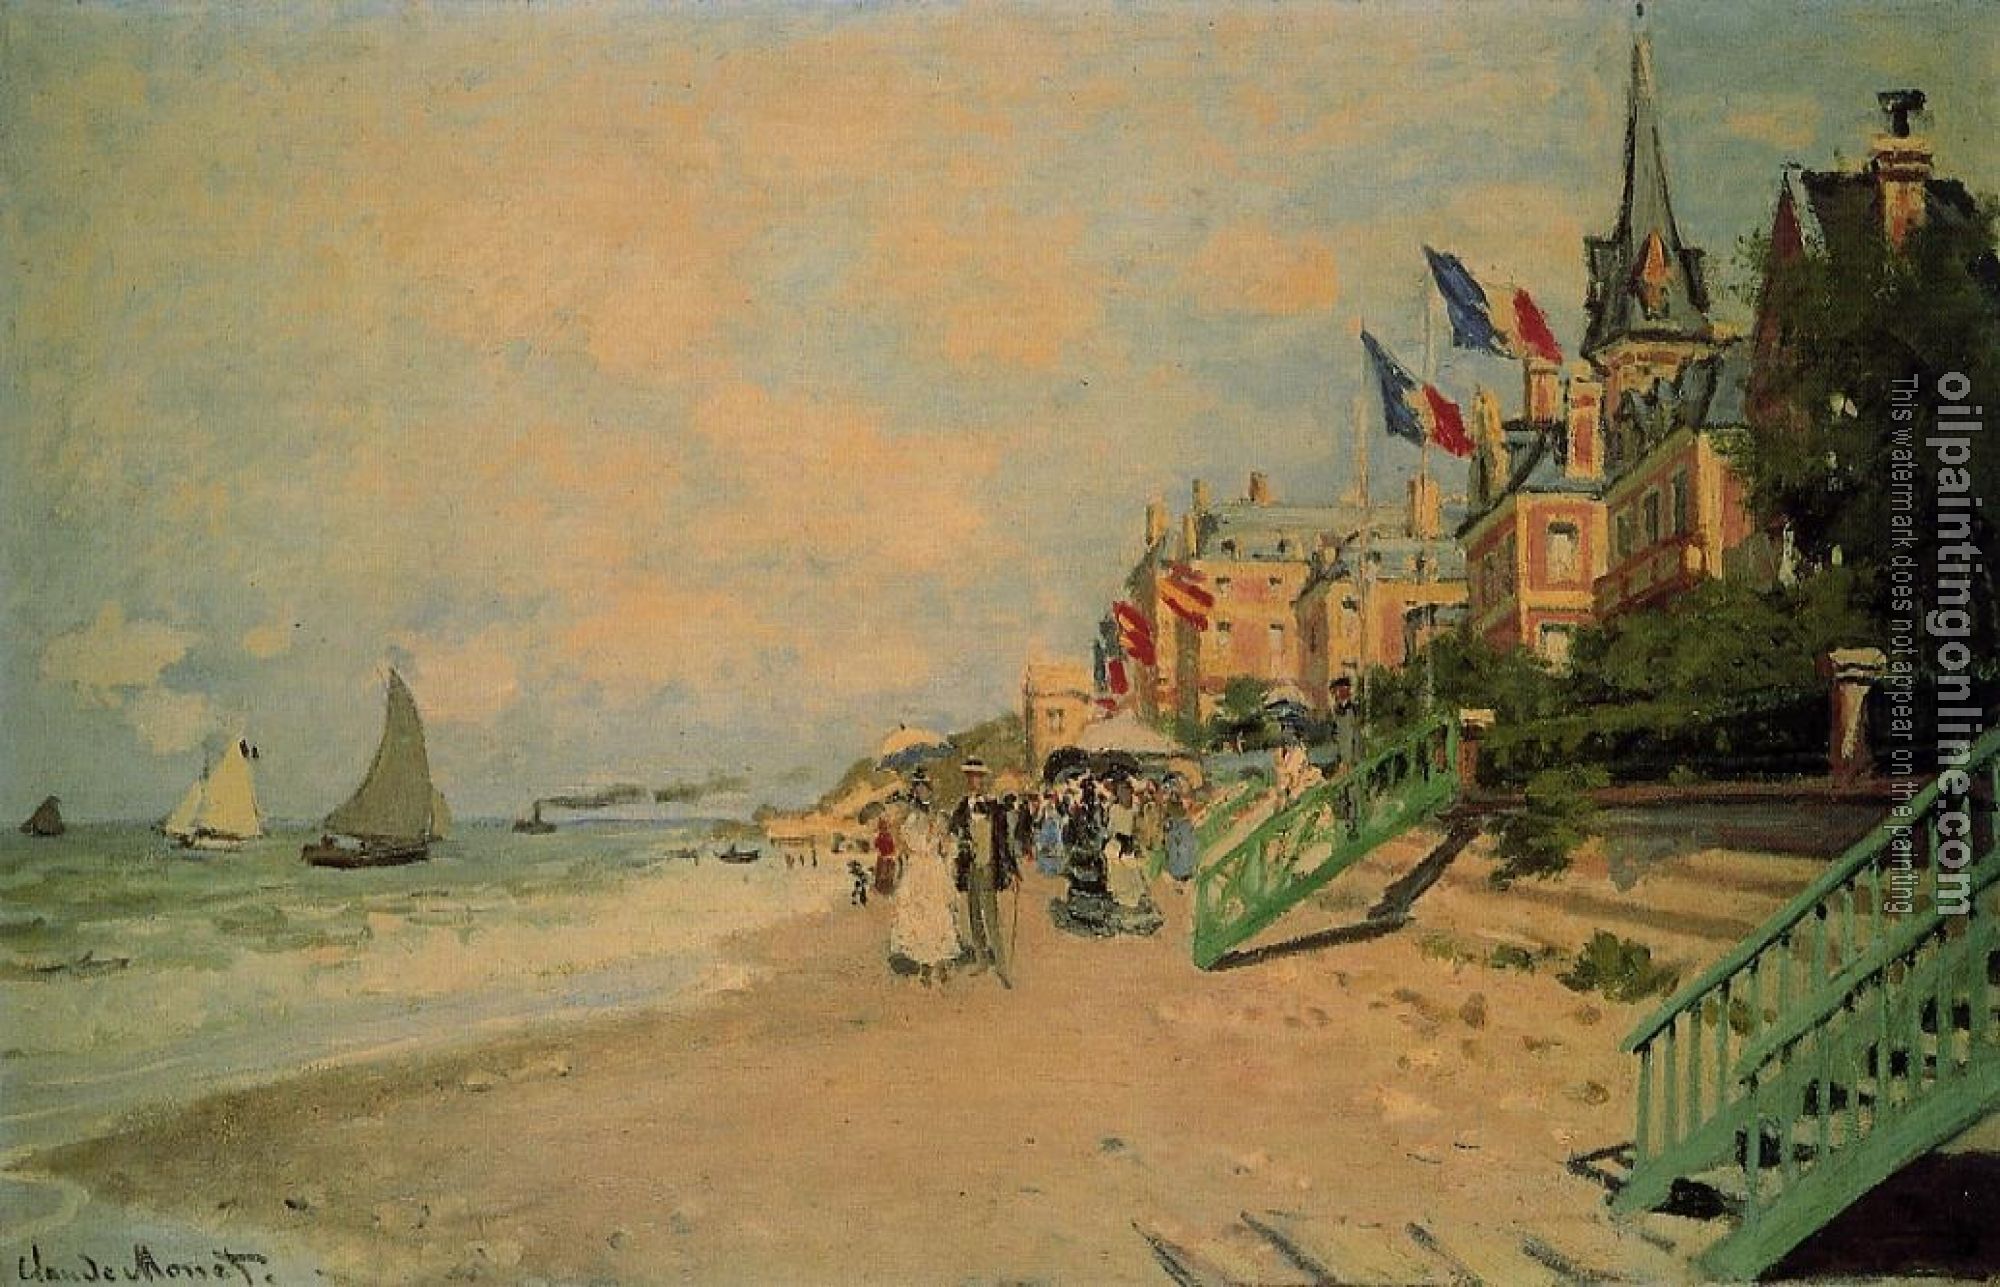 Monet, Claude Oscar - The Beach at Trouville